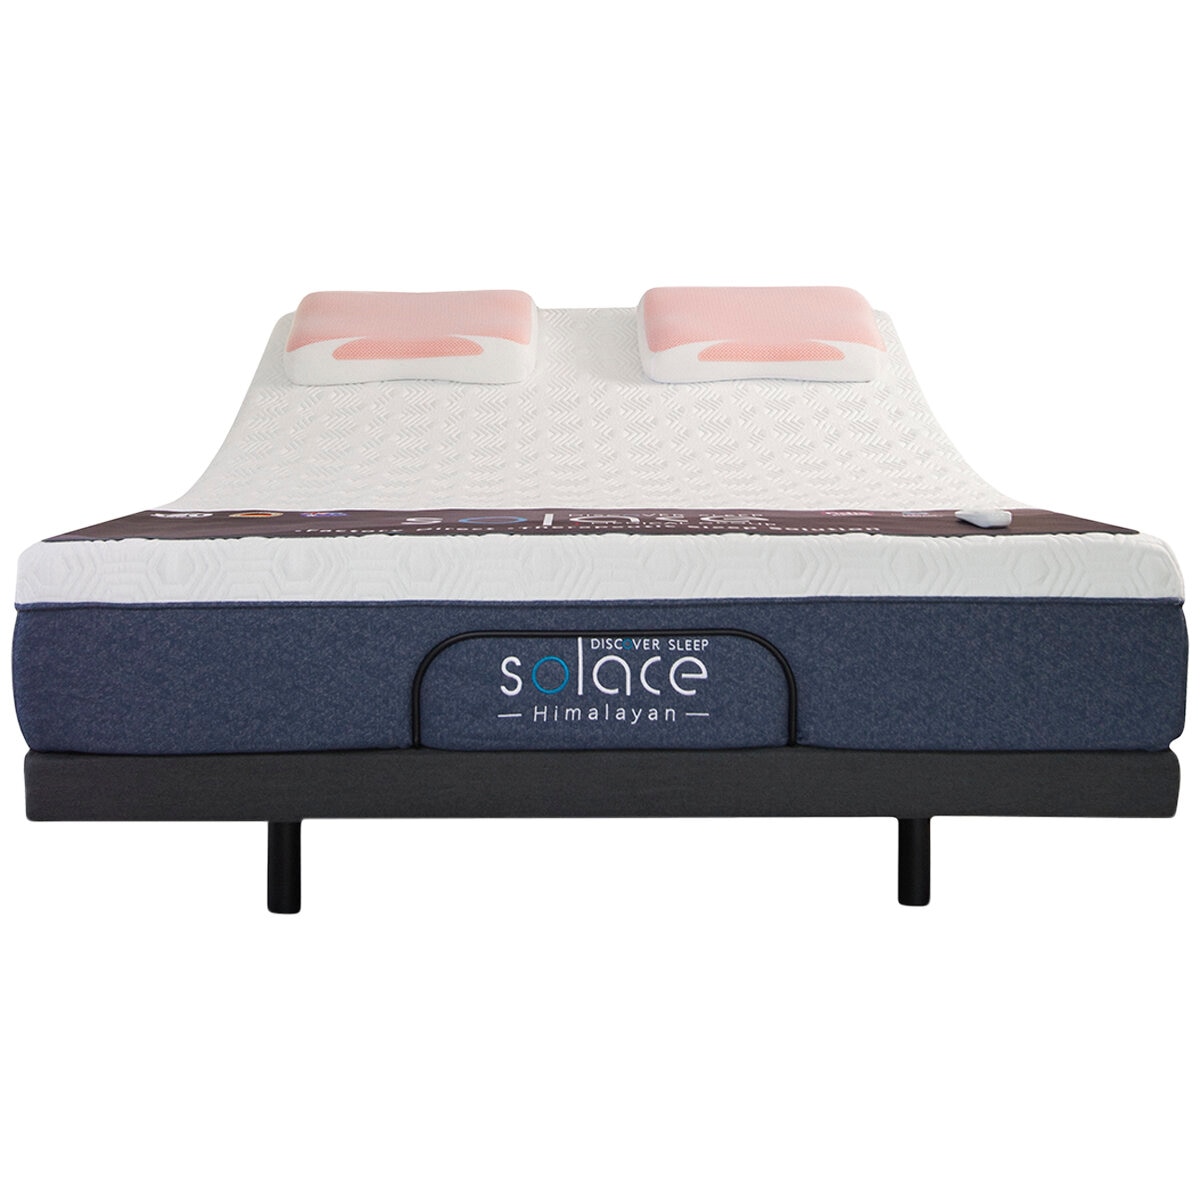 Solace Himalayan Mattress and Better Sleep Adjustable Base - Double